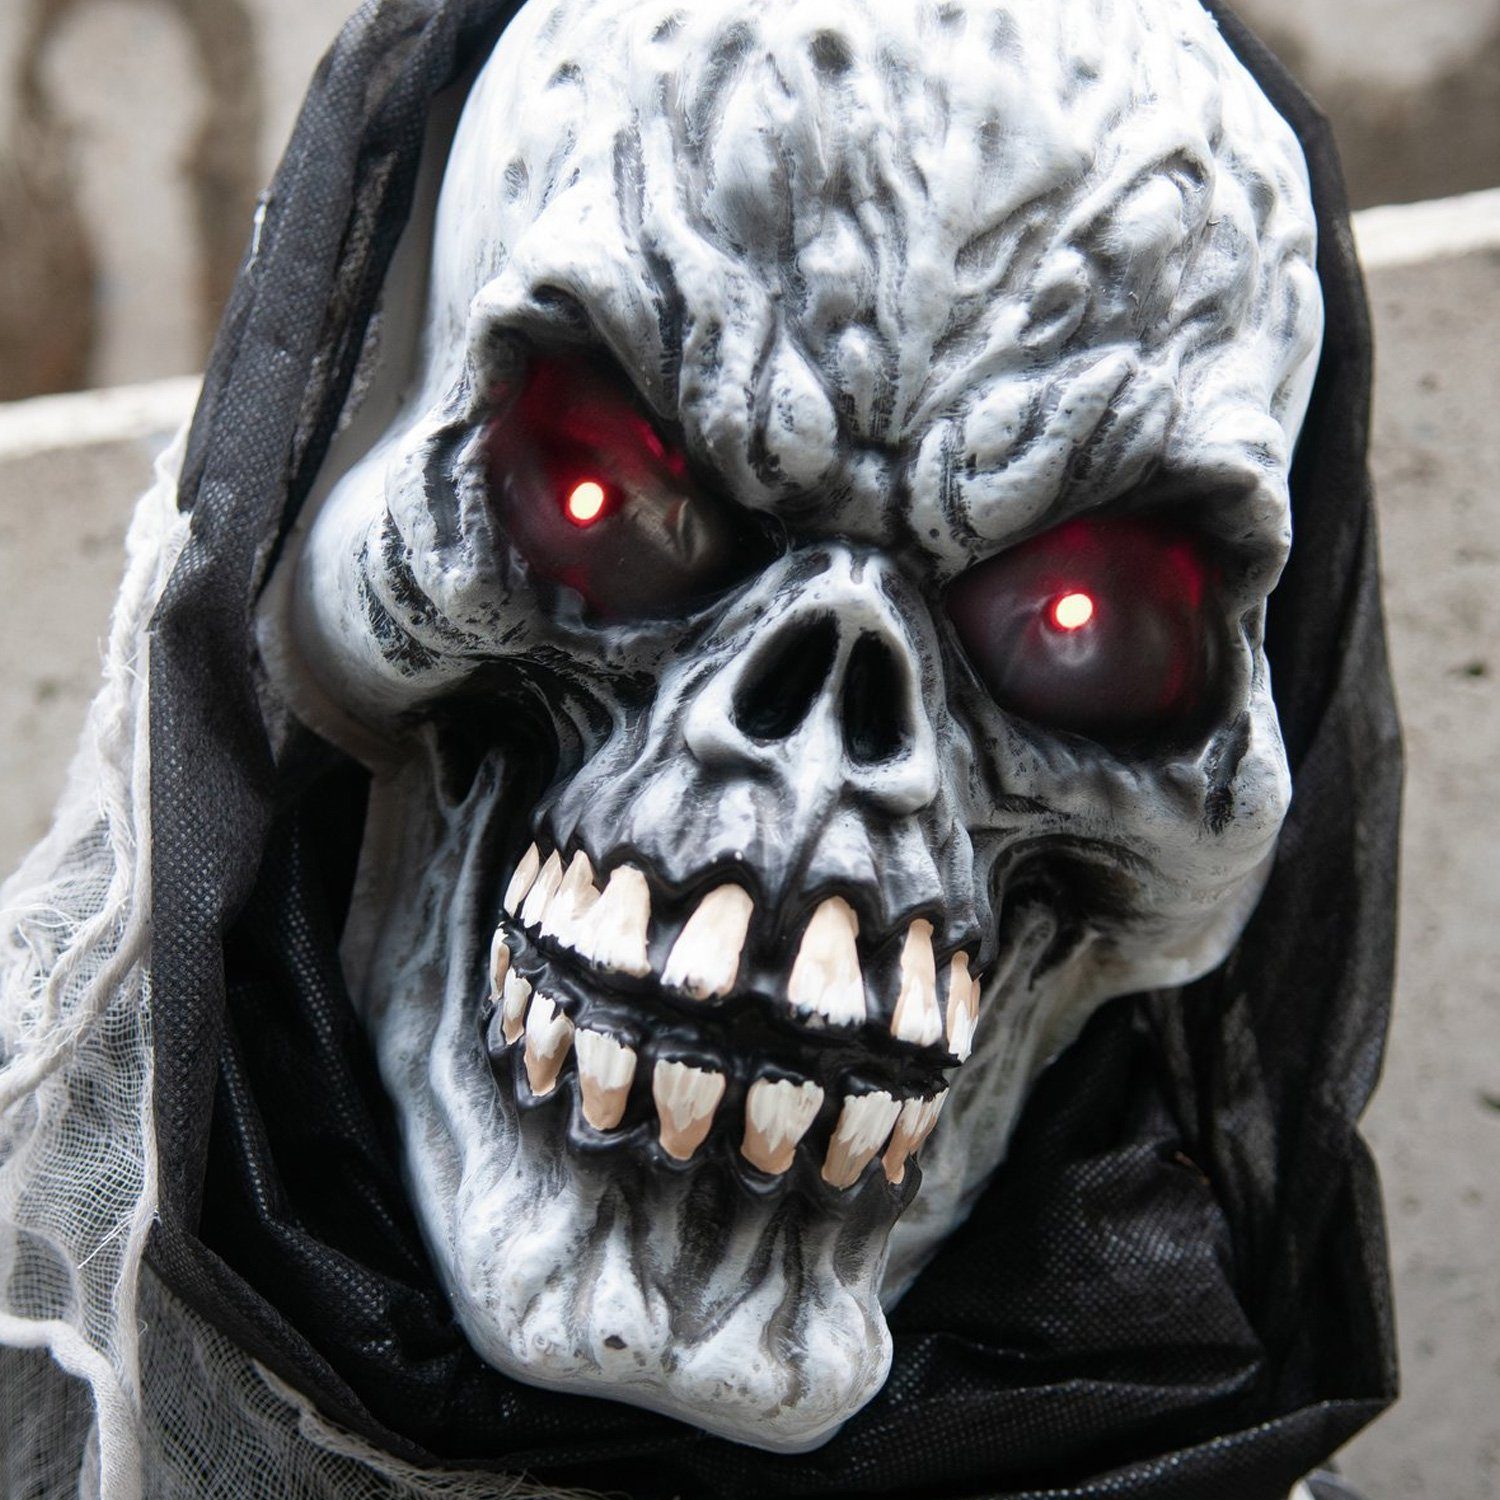 bewegte, DEATH Halloween - SATISFIRE Zomiefigur 68cm Dekofigur gruselige Figur MAN,